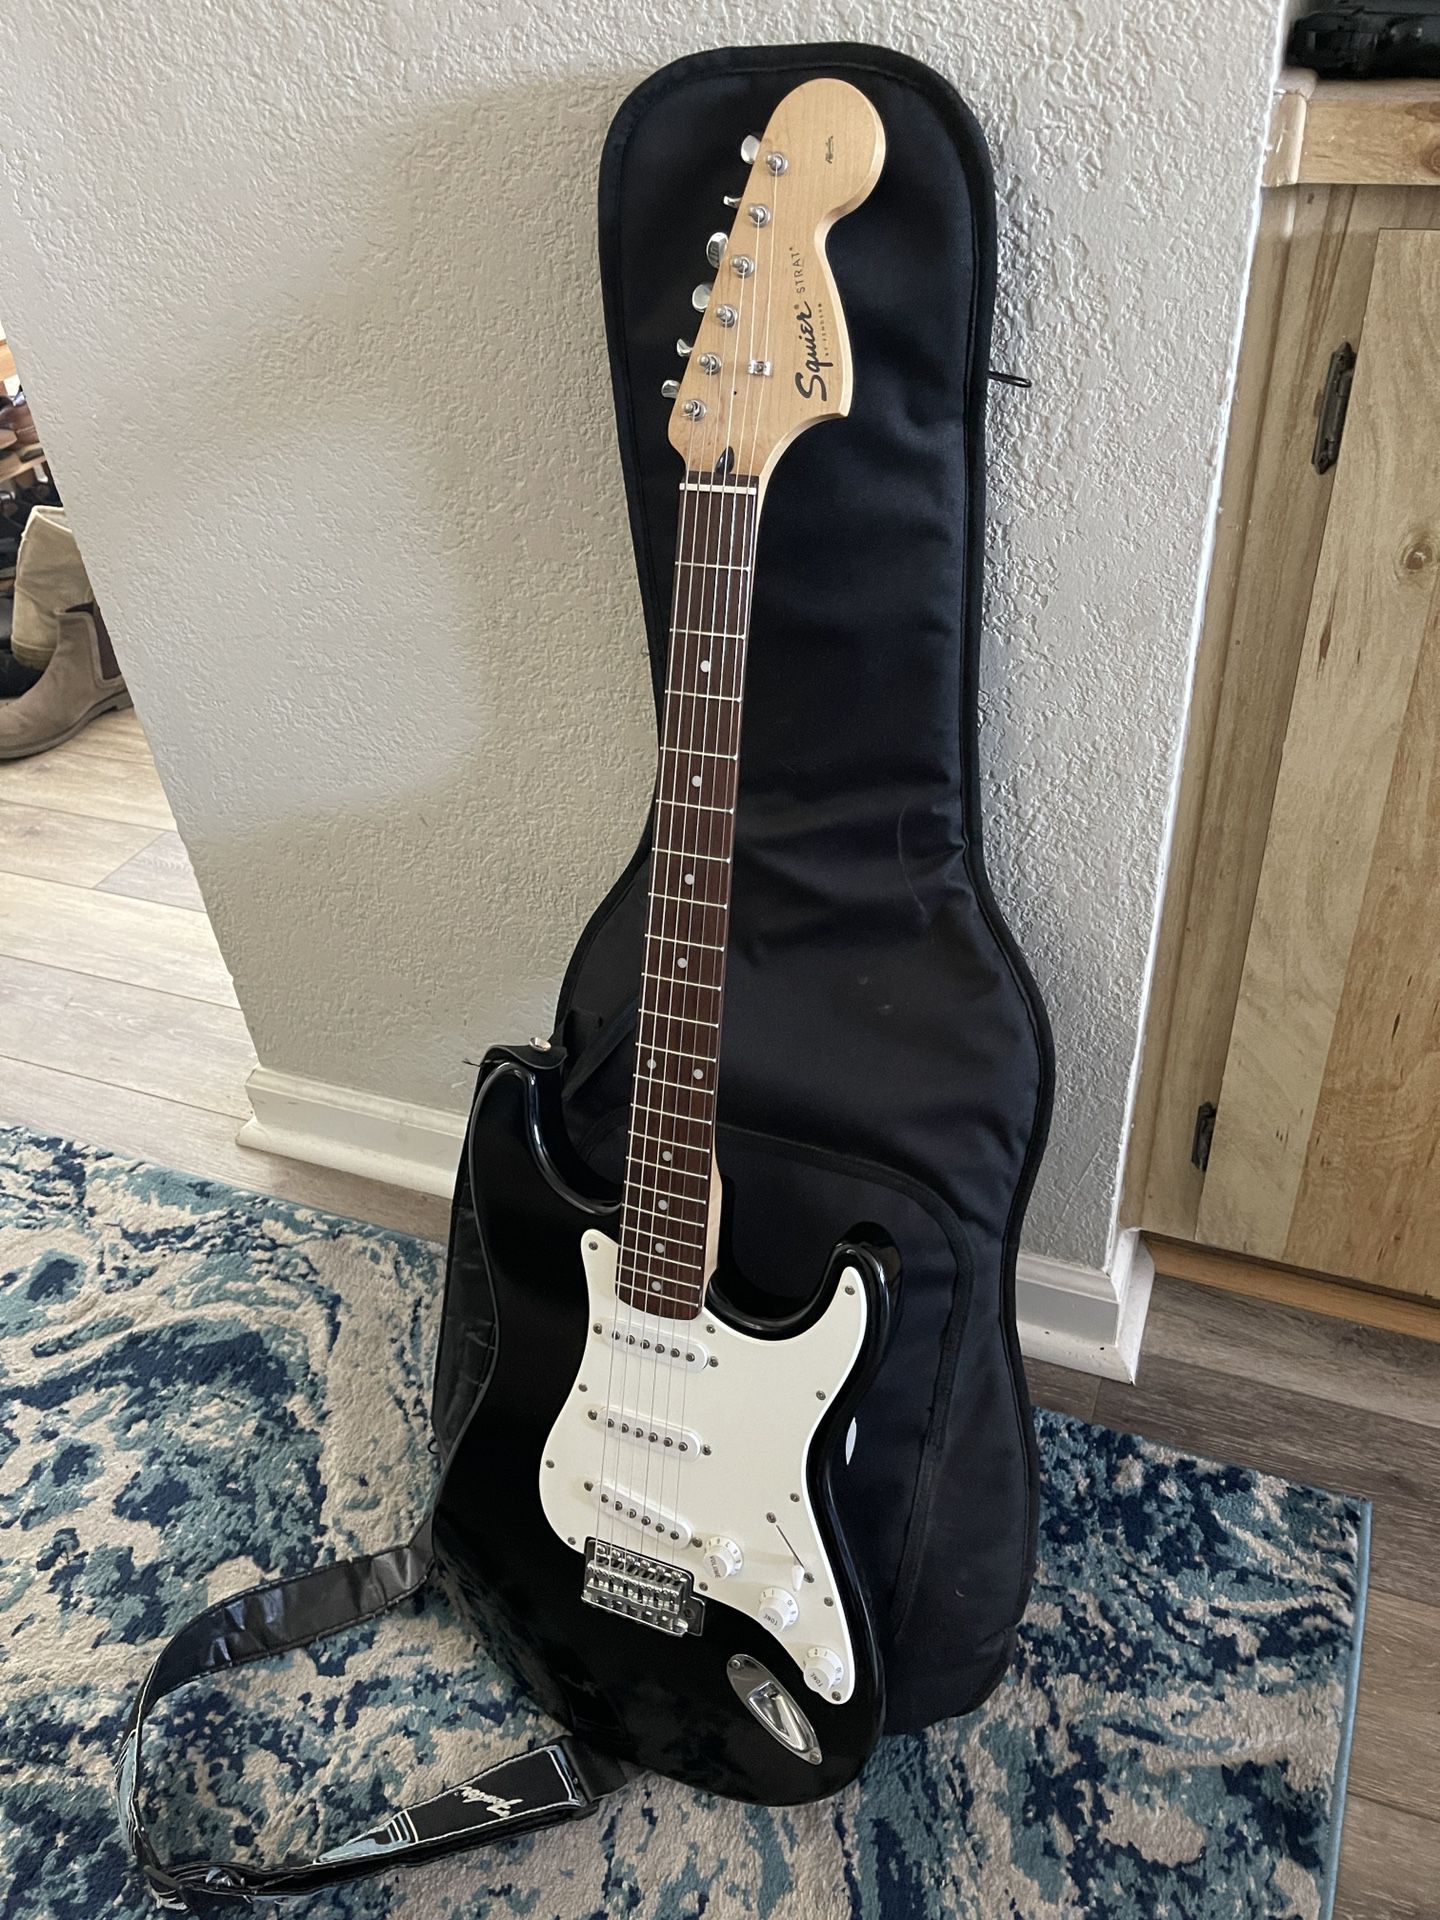 Fender Squire Strat Black White Electric Guitar W Case